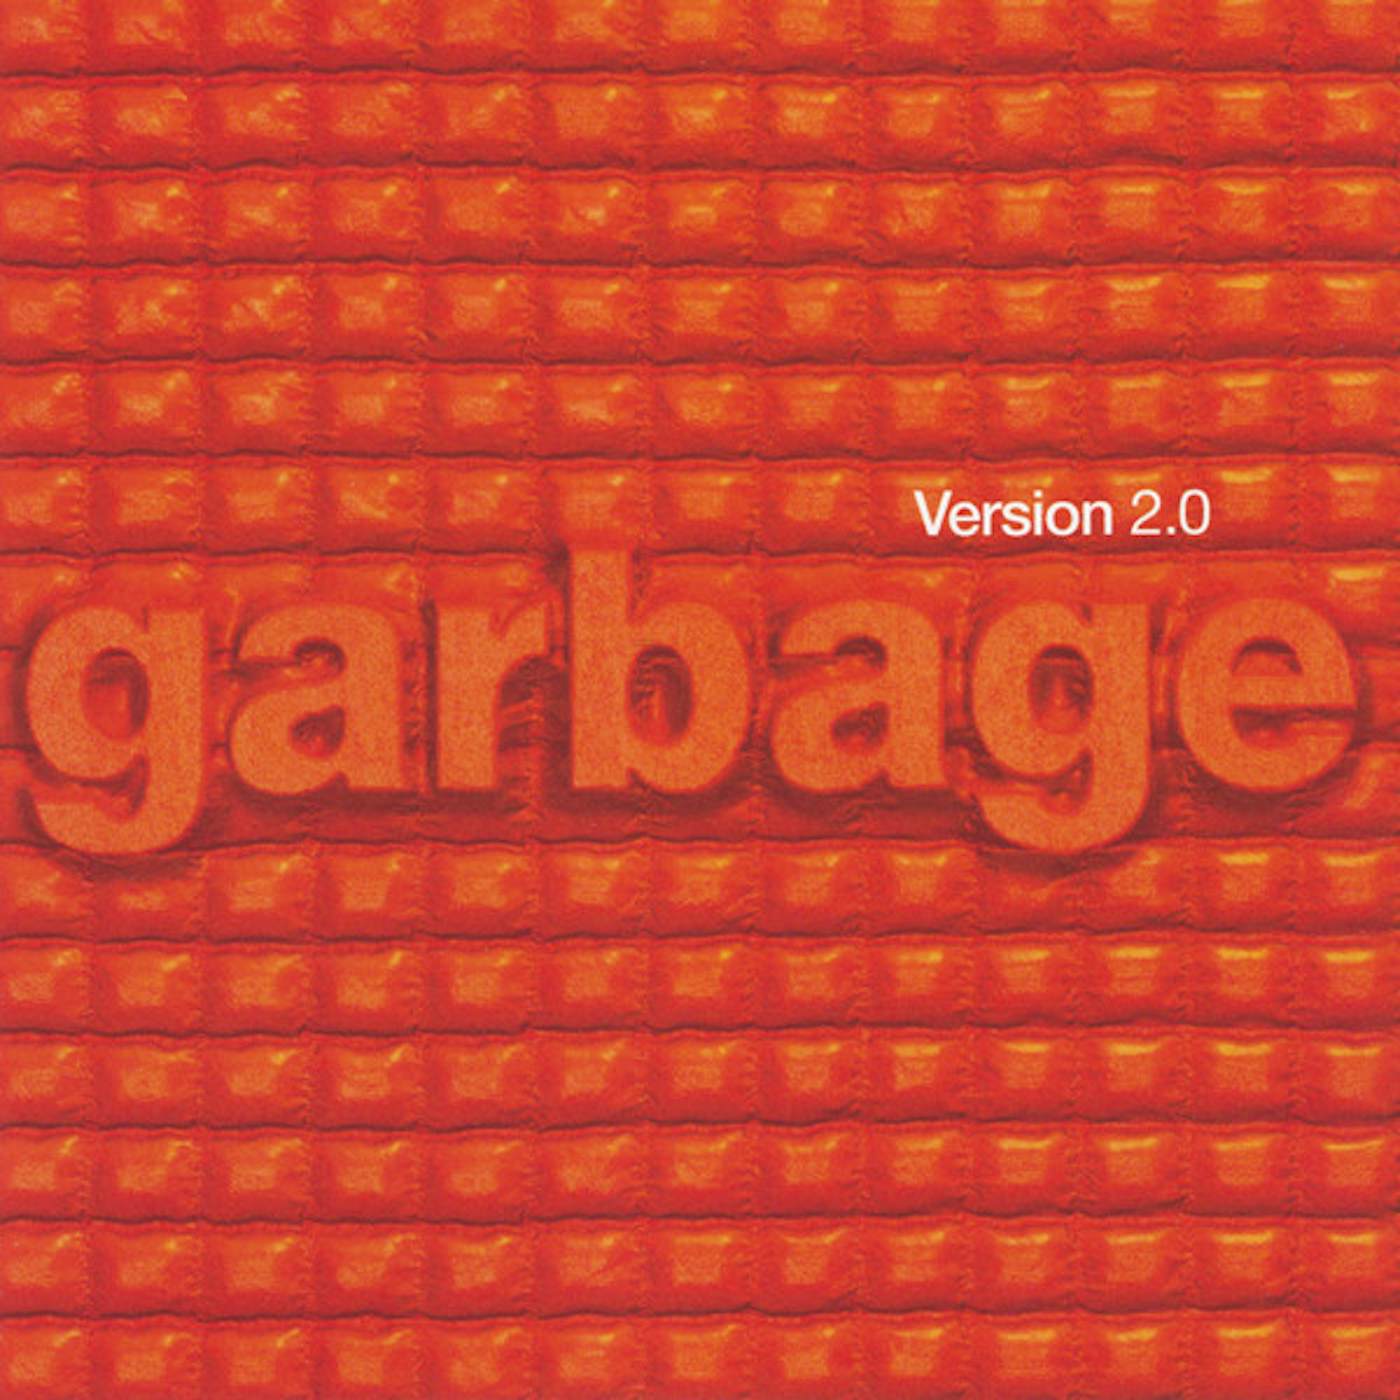 Garbage Version 2.0 Vinyl Record